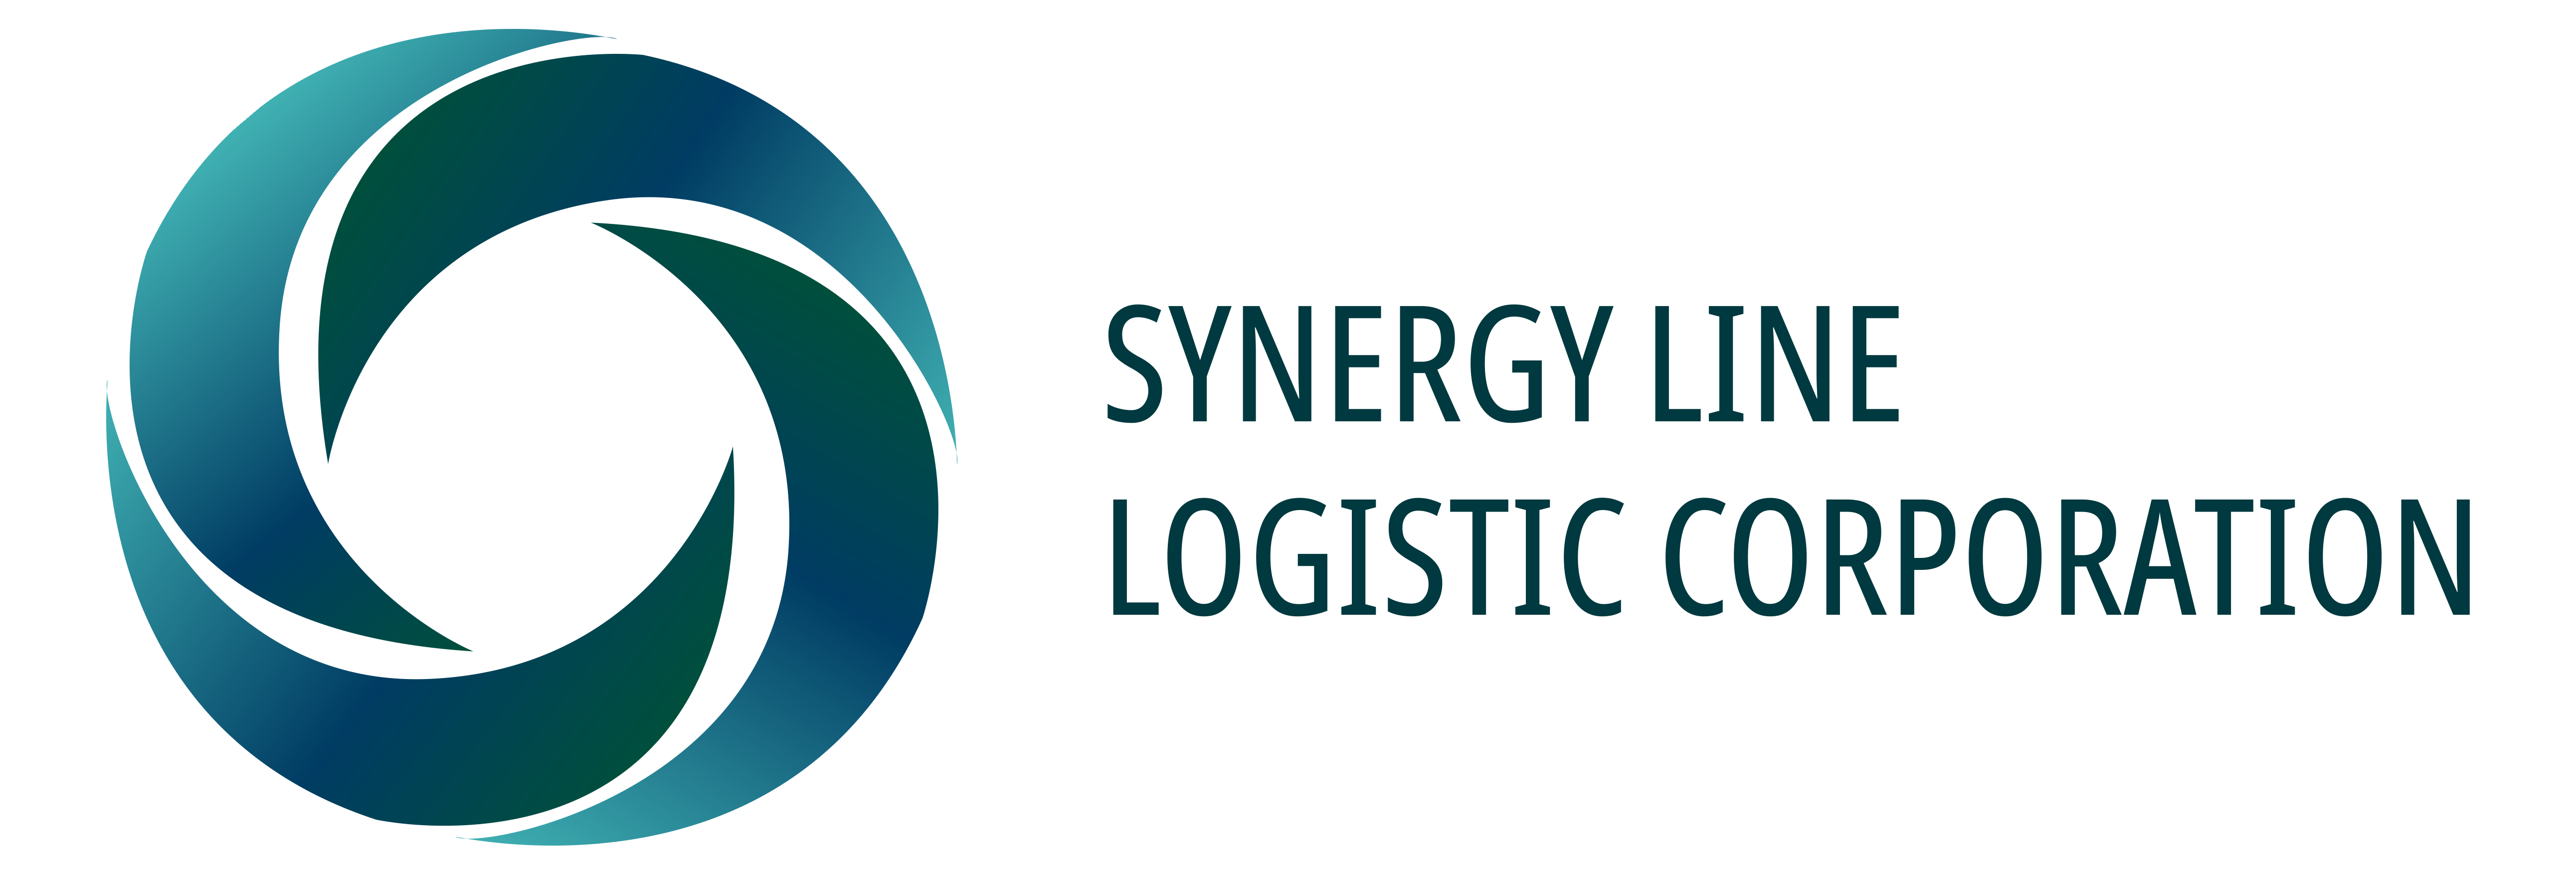 Synergy Line Logistic Corp Main Logo